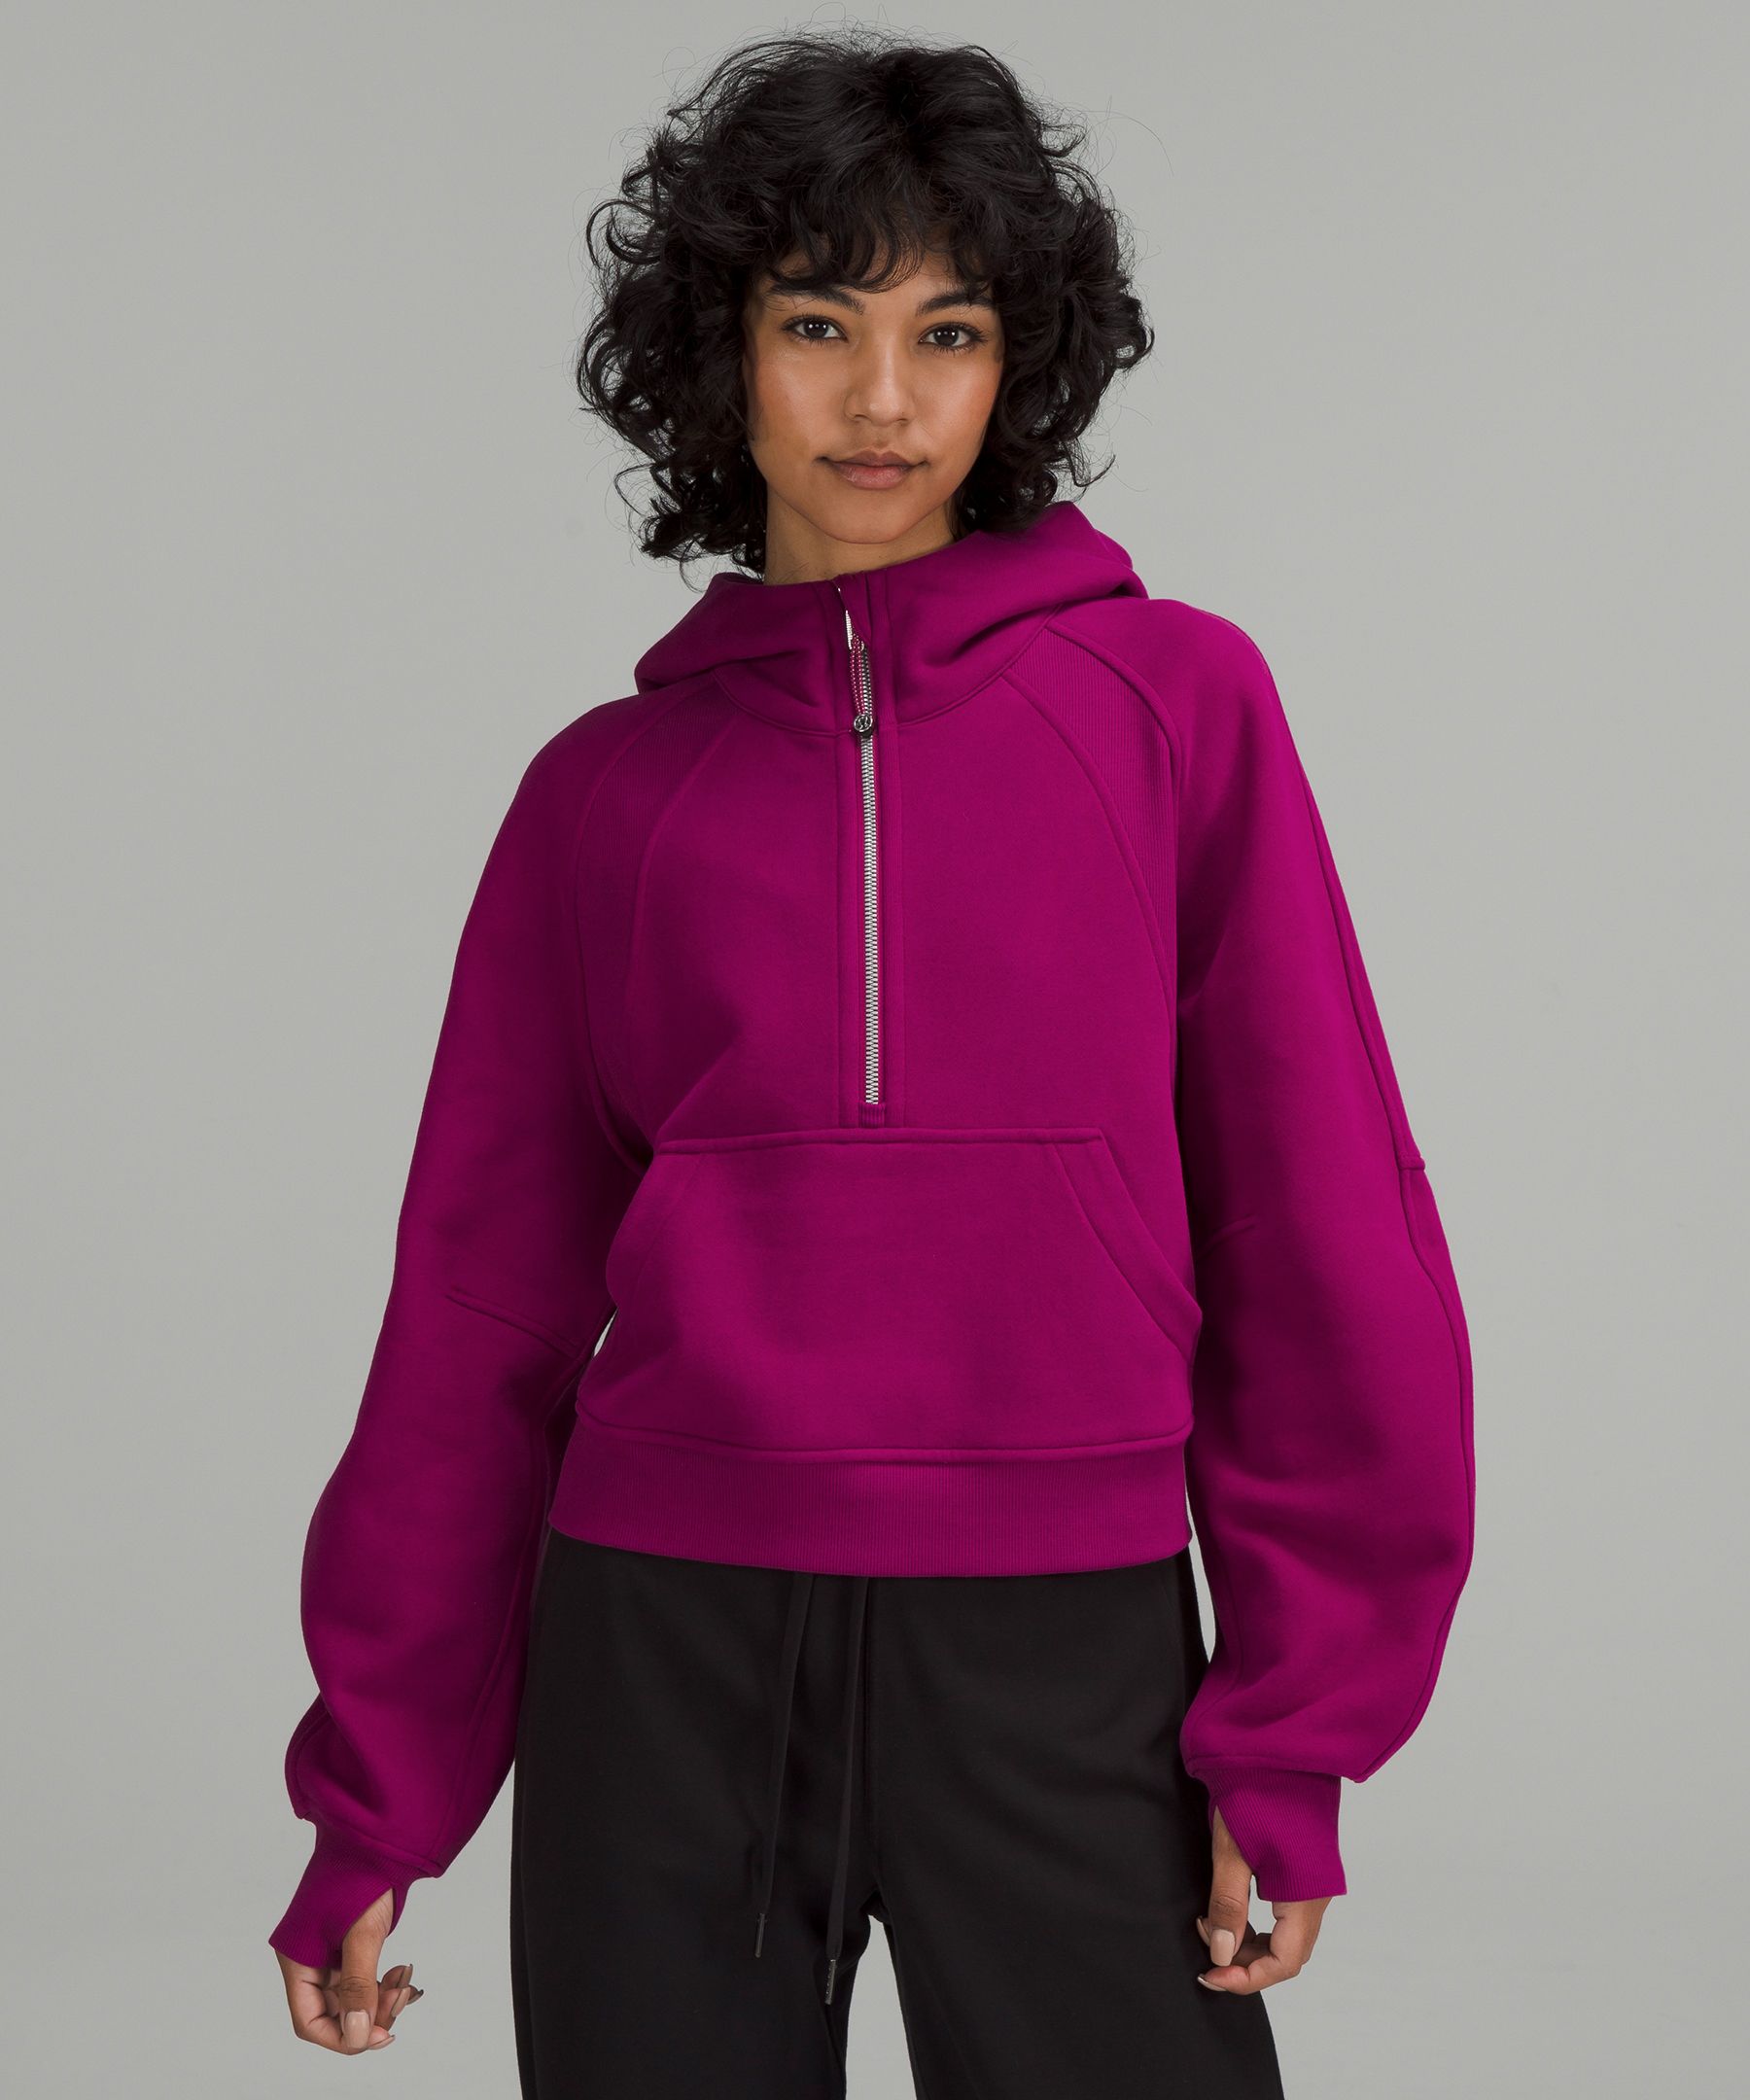 Mint Lilac Womens Full-Zip Workout Sports Hoodies Lightweight Running Track Jackets